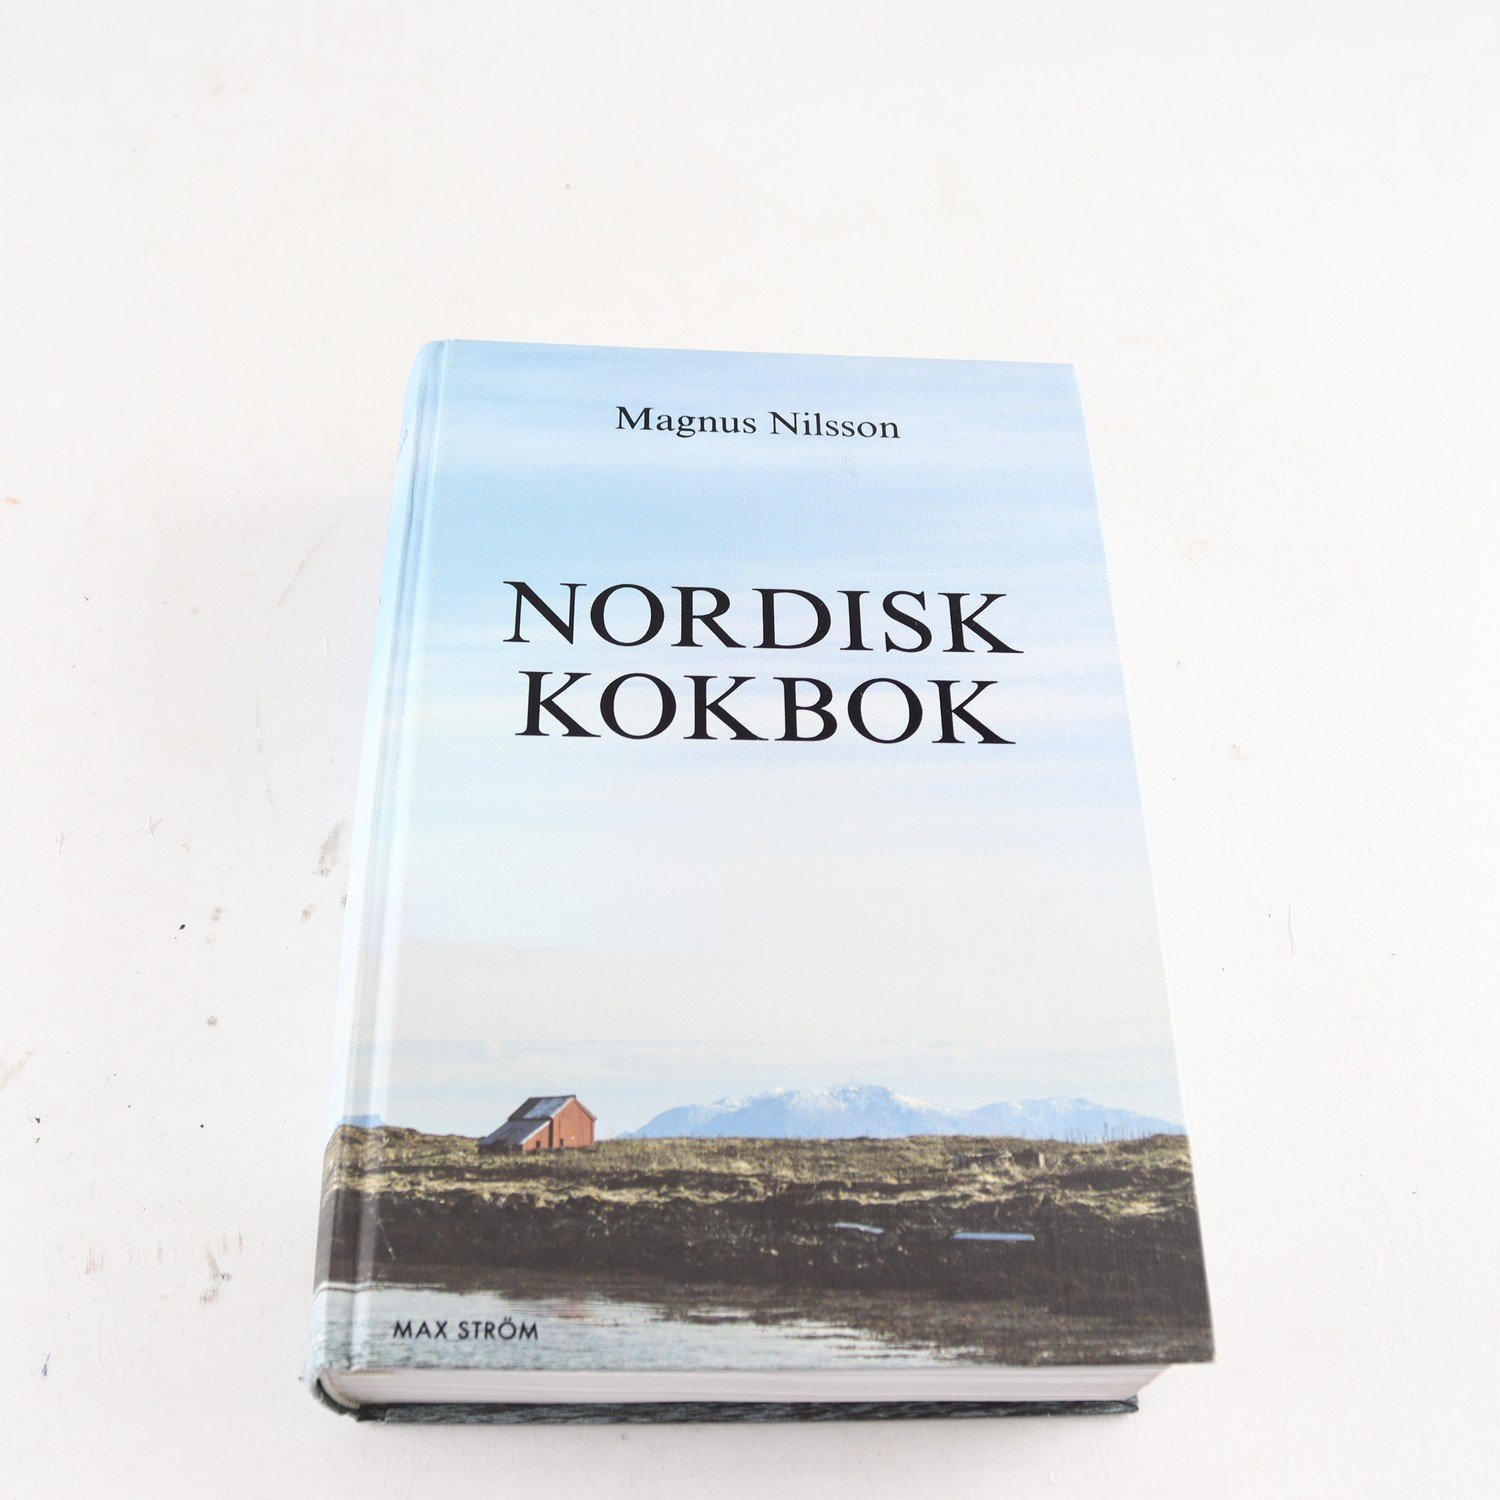 Nordisk kokbok, Magnus Nilsson